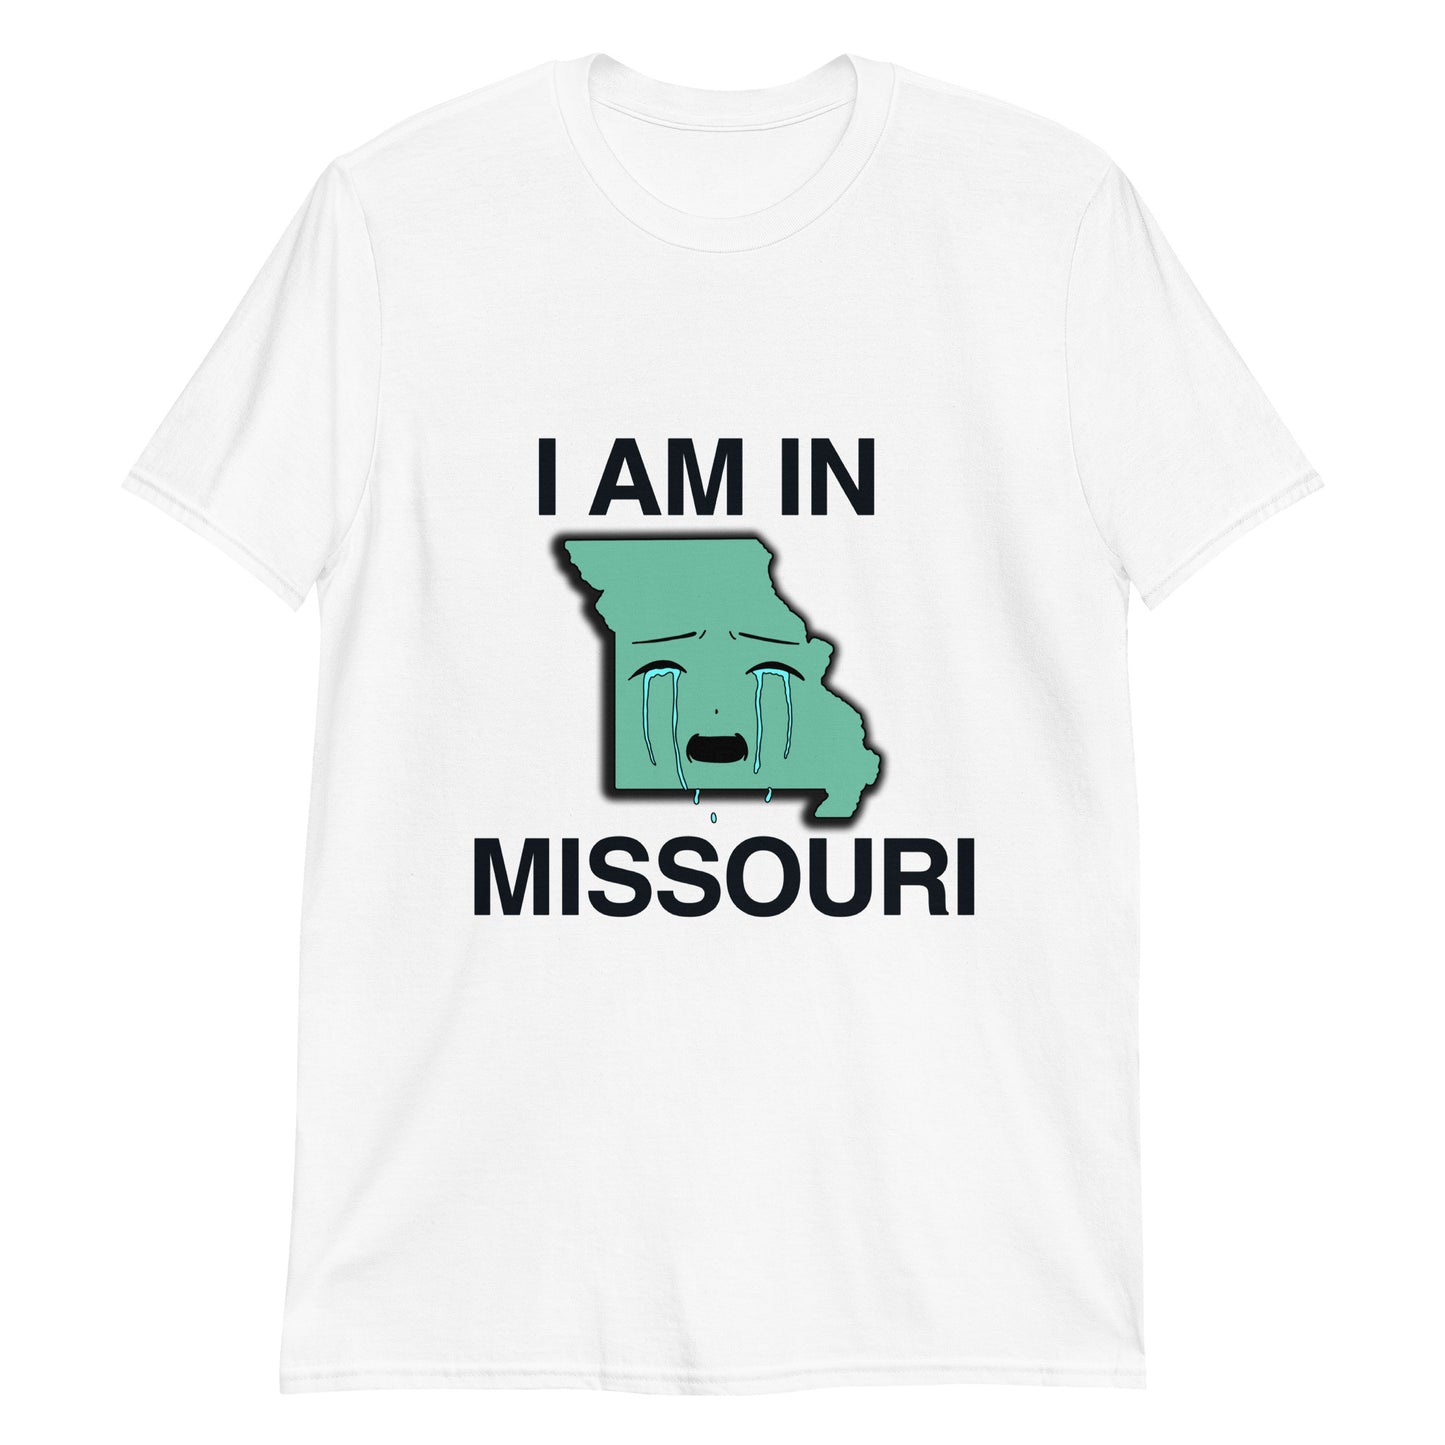 I Am in Missouri.